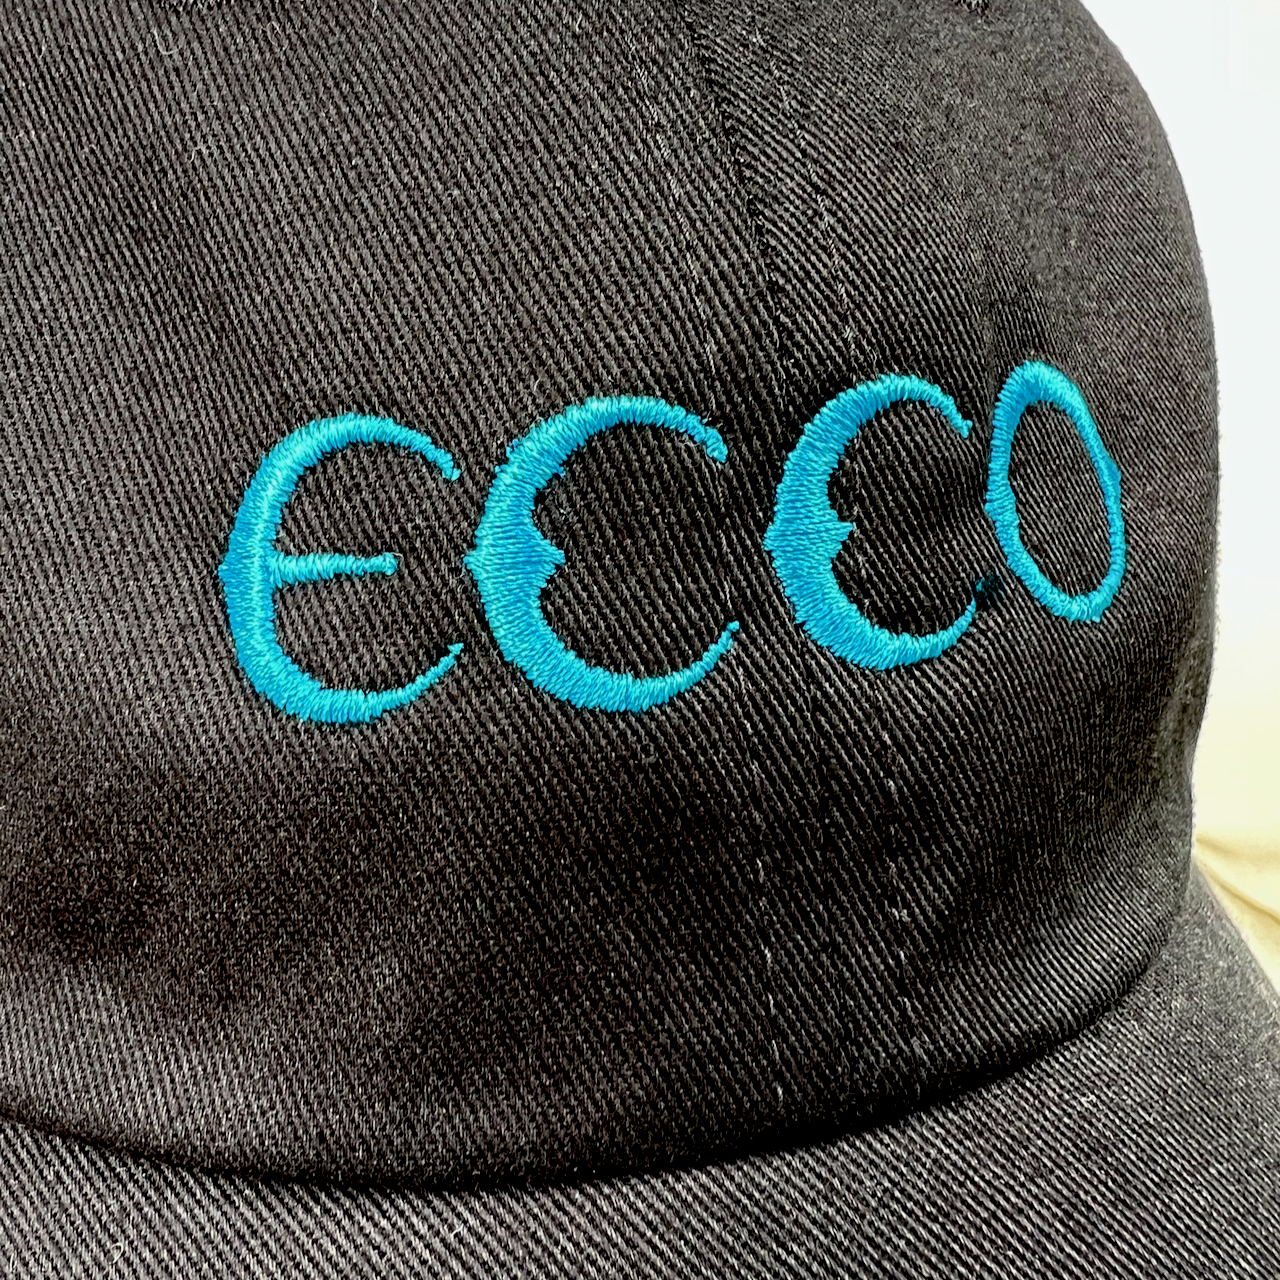 Ecco the Dolphin logo Hat